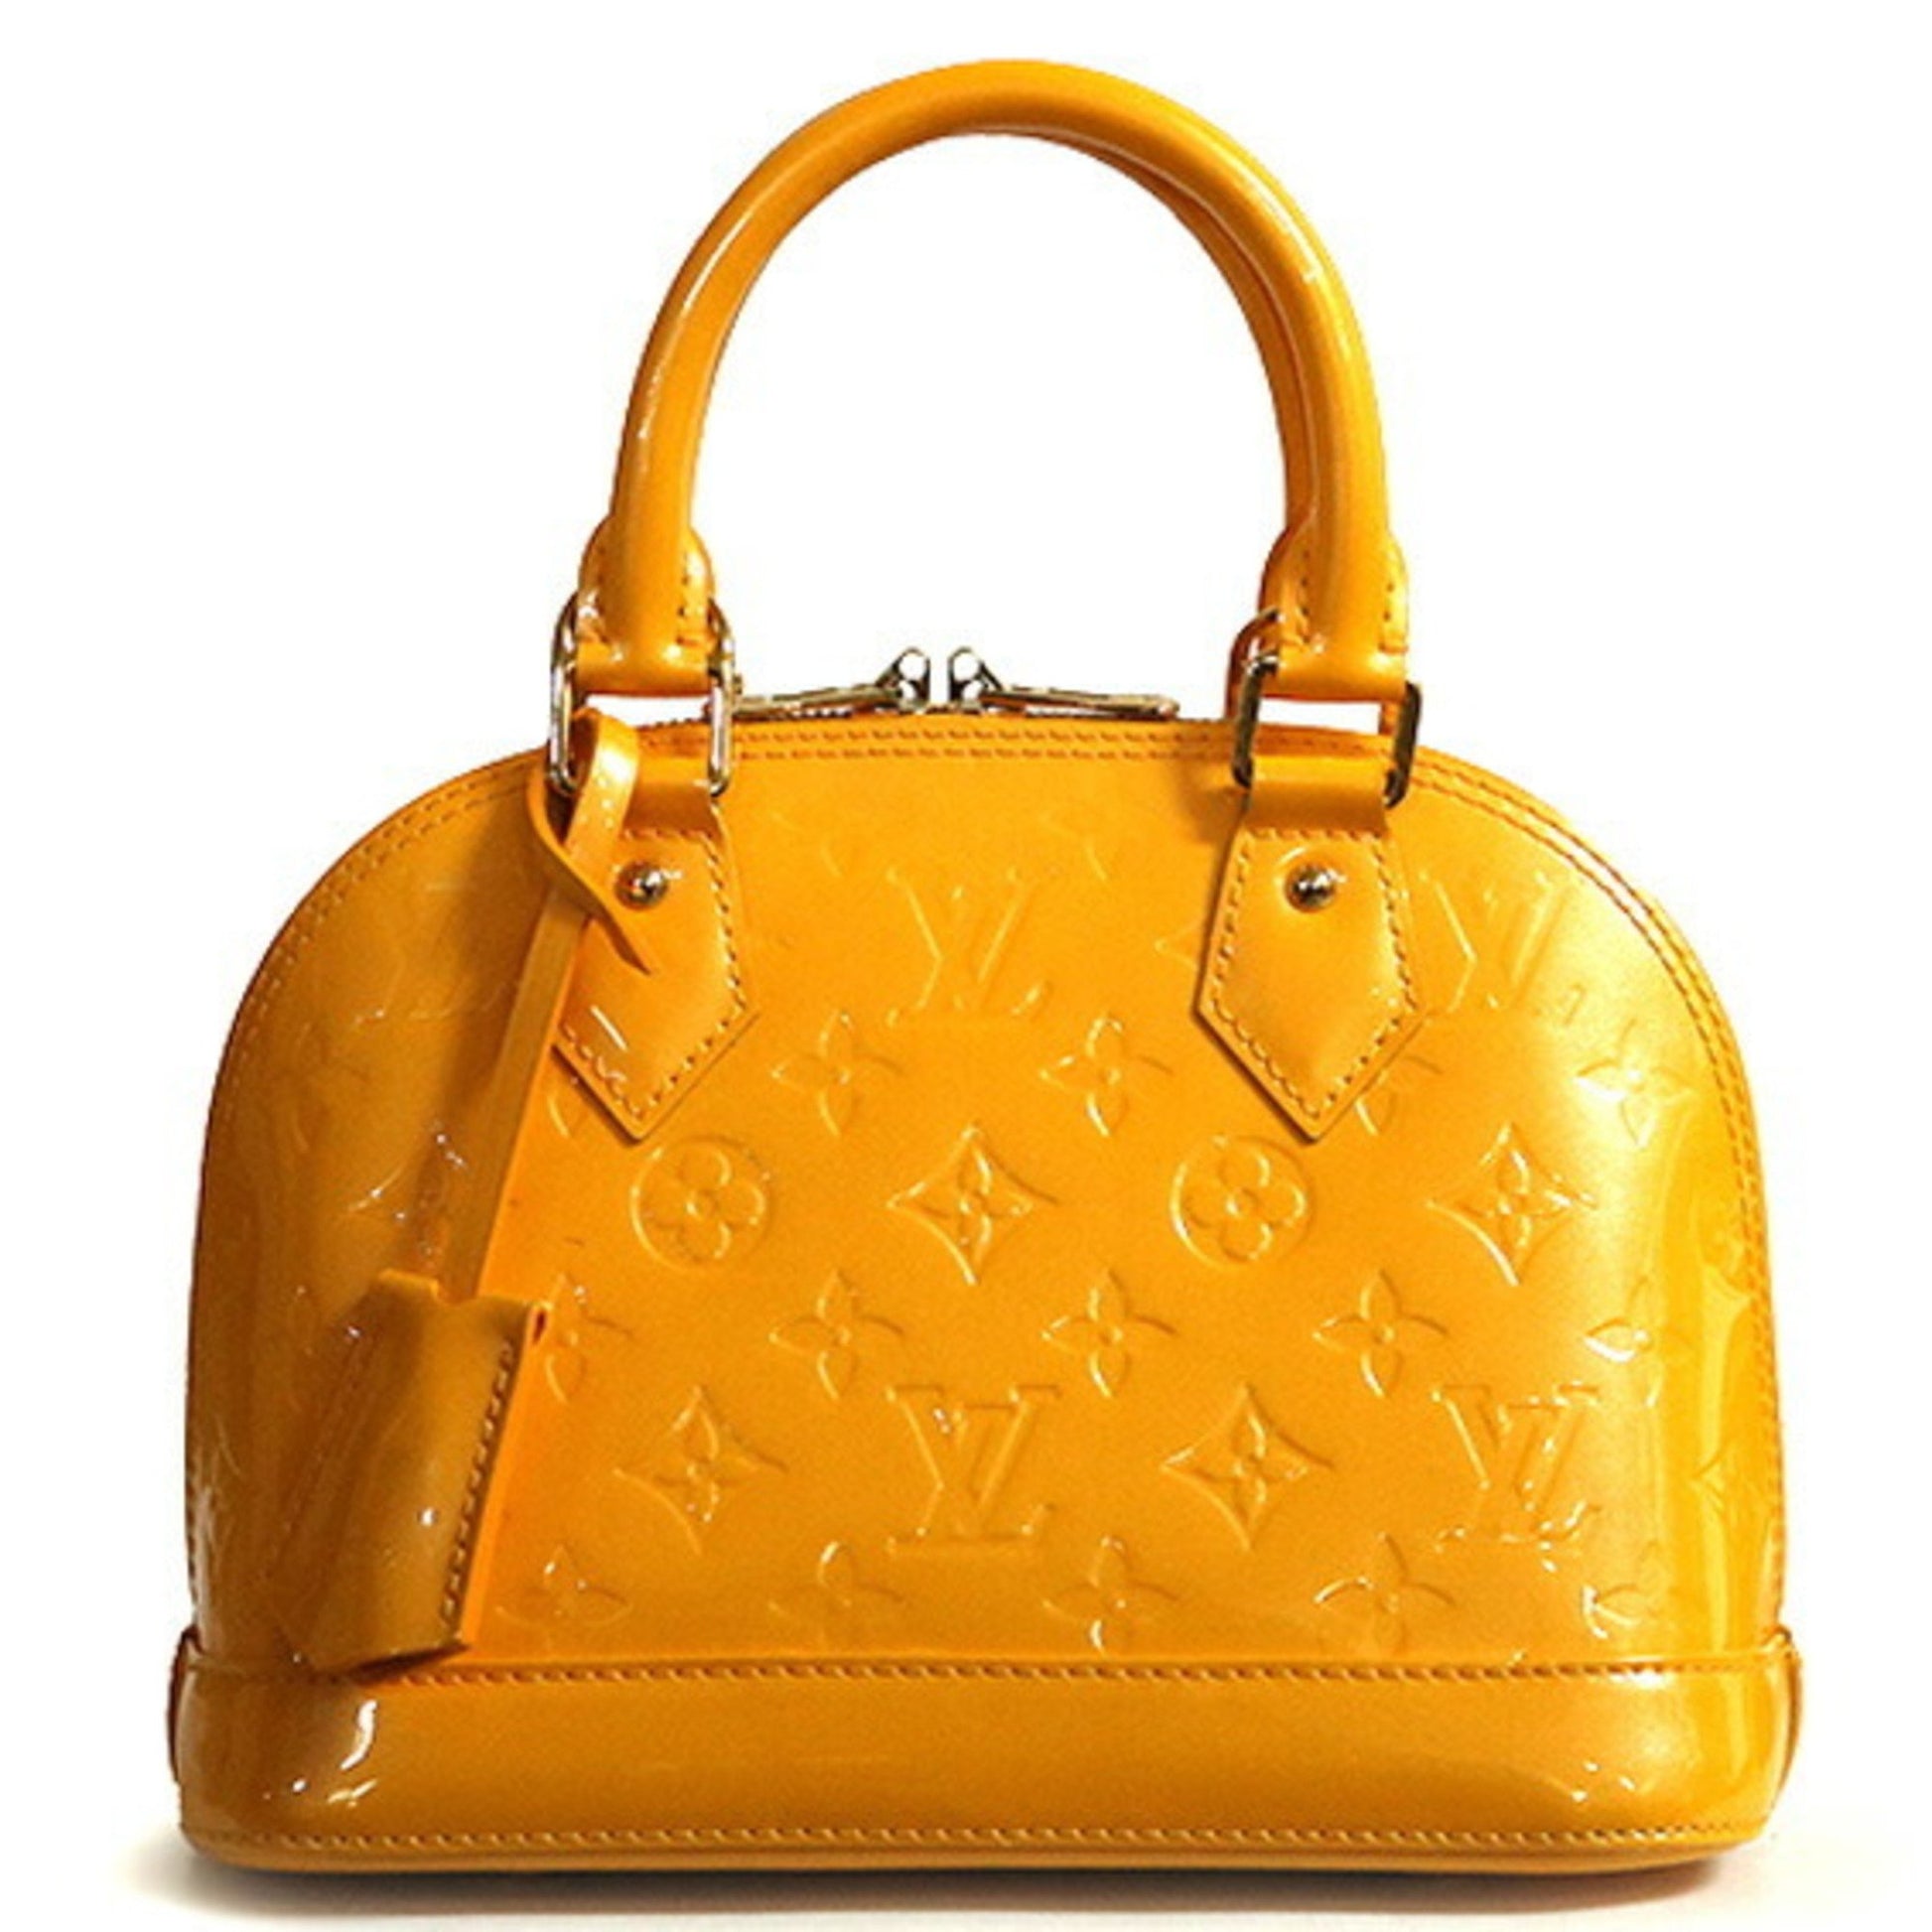 Louis Vuitton LV Alma PM Handbag Yellow Vernis Bag - EXCELLENT